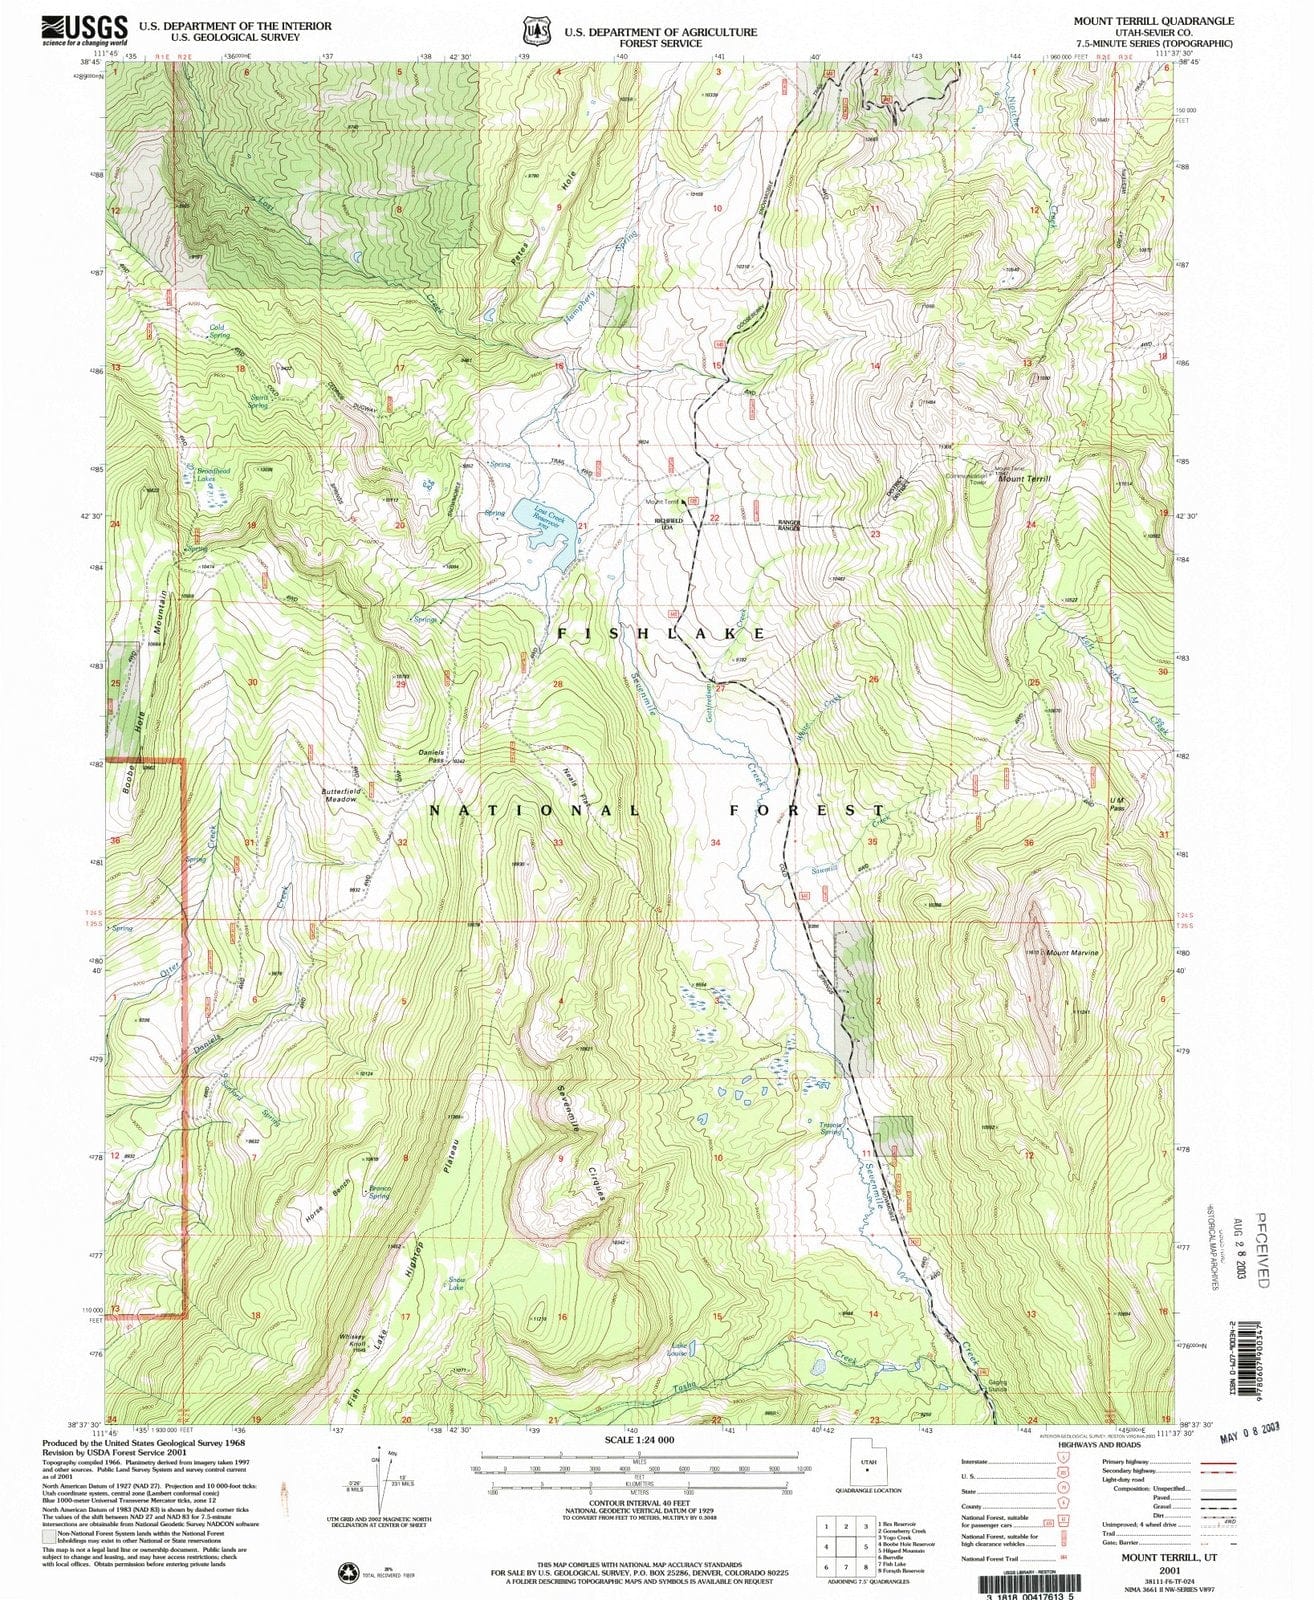 2001 Mount Terrill, UT - Utah - USGS Topographic Map